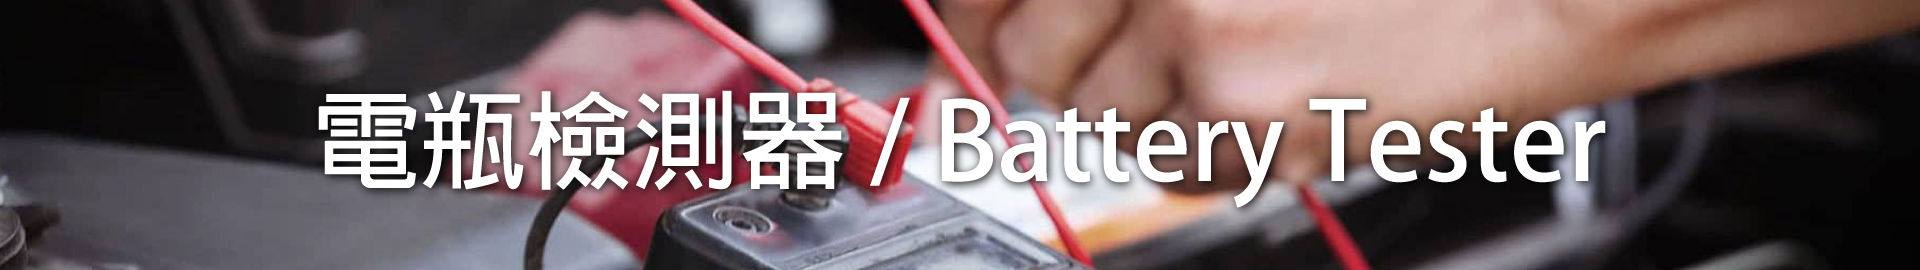 電池檢測設備,电池检测设备,Battery Tester / Monitor